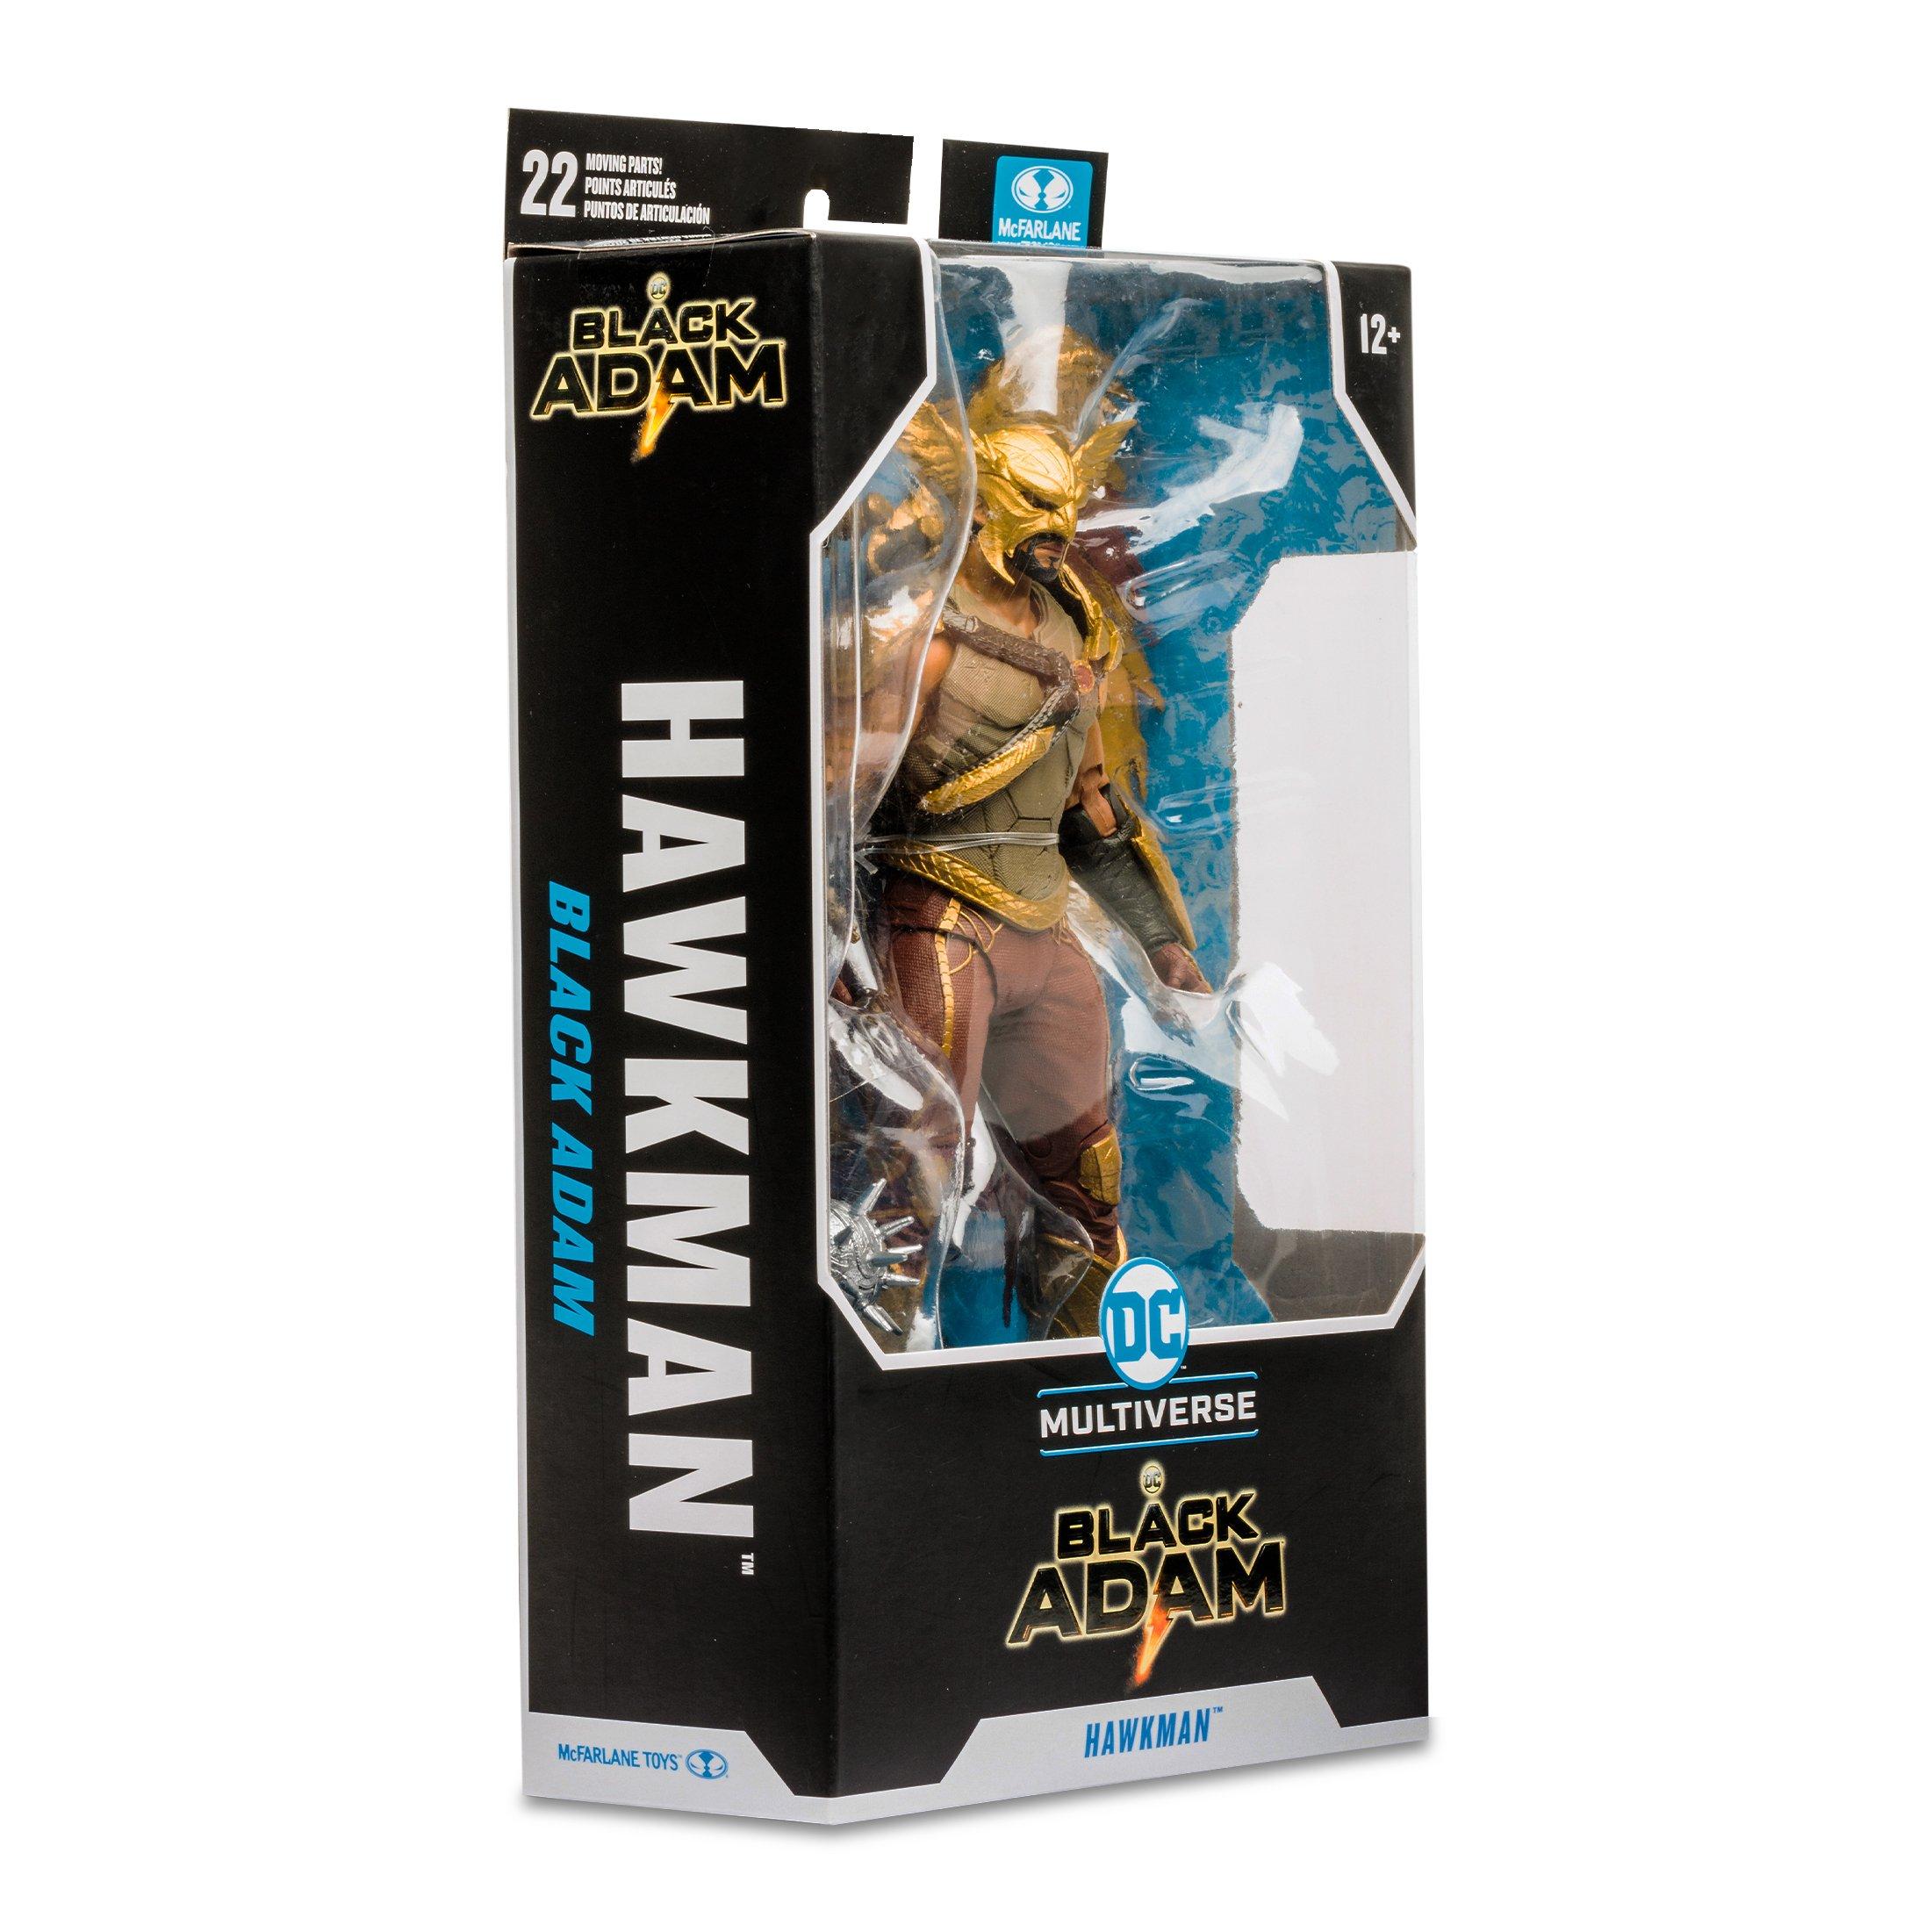 list item 9 of 10 McFarlane Toys DC Multiverse Black Adam Hawkman 7-in Scale Action Figure